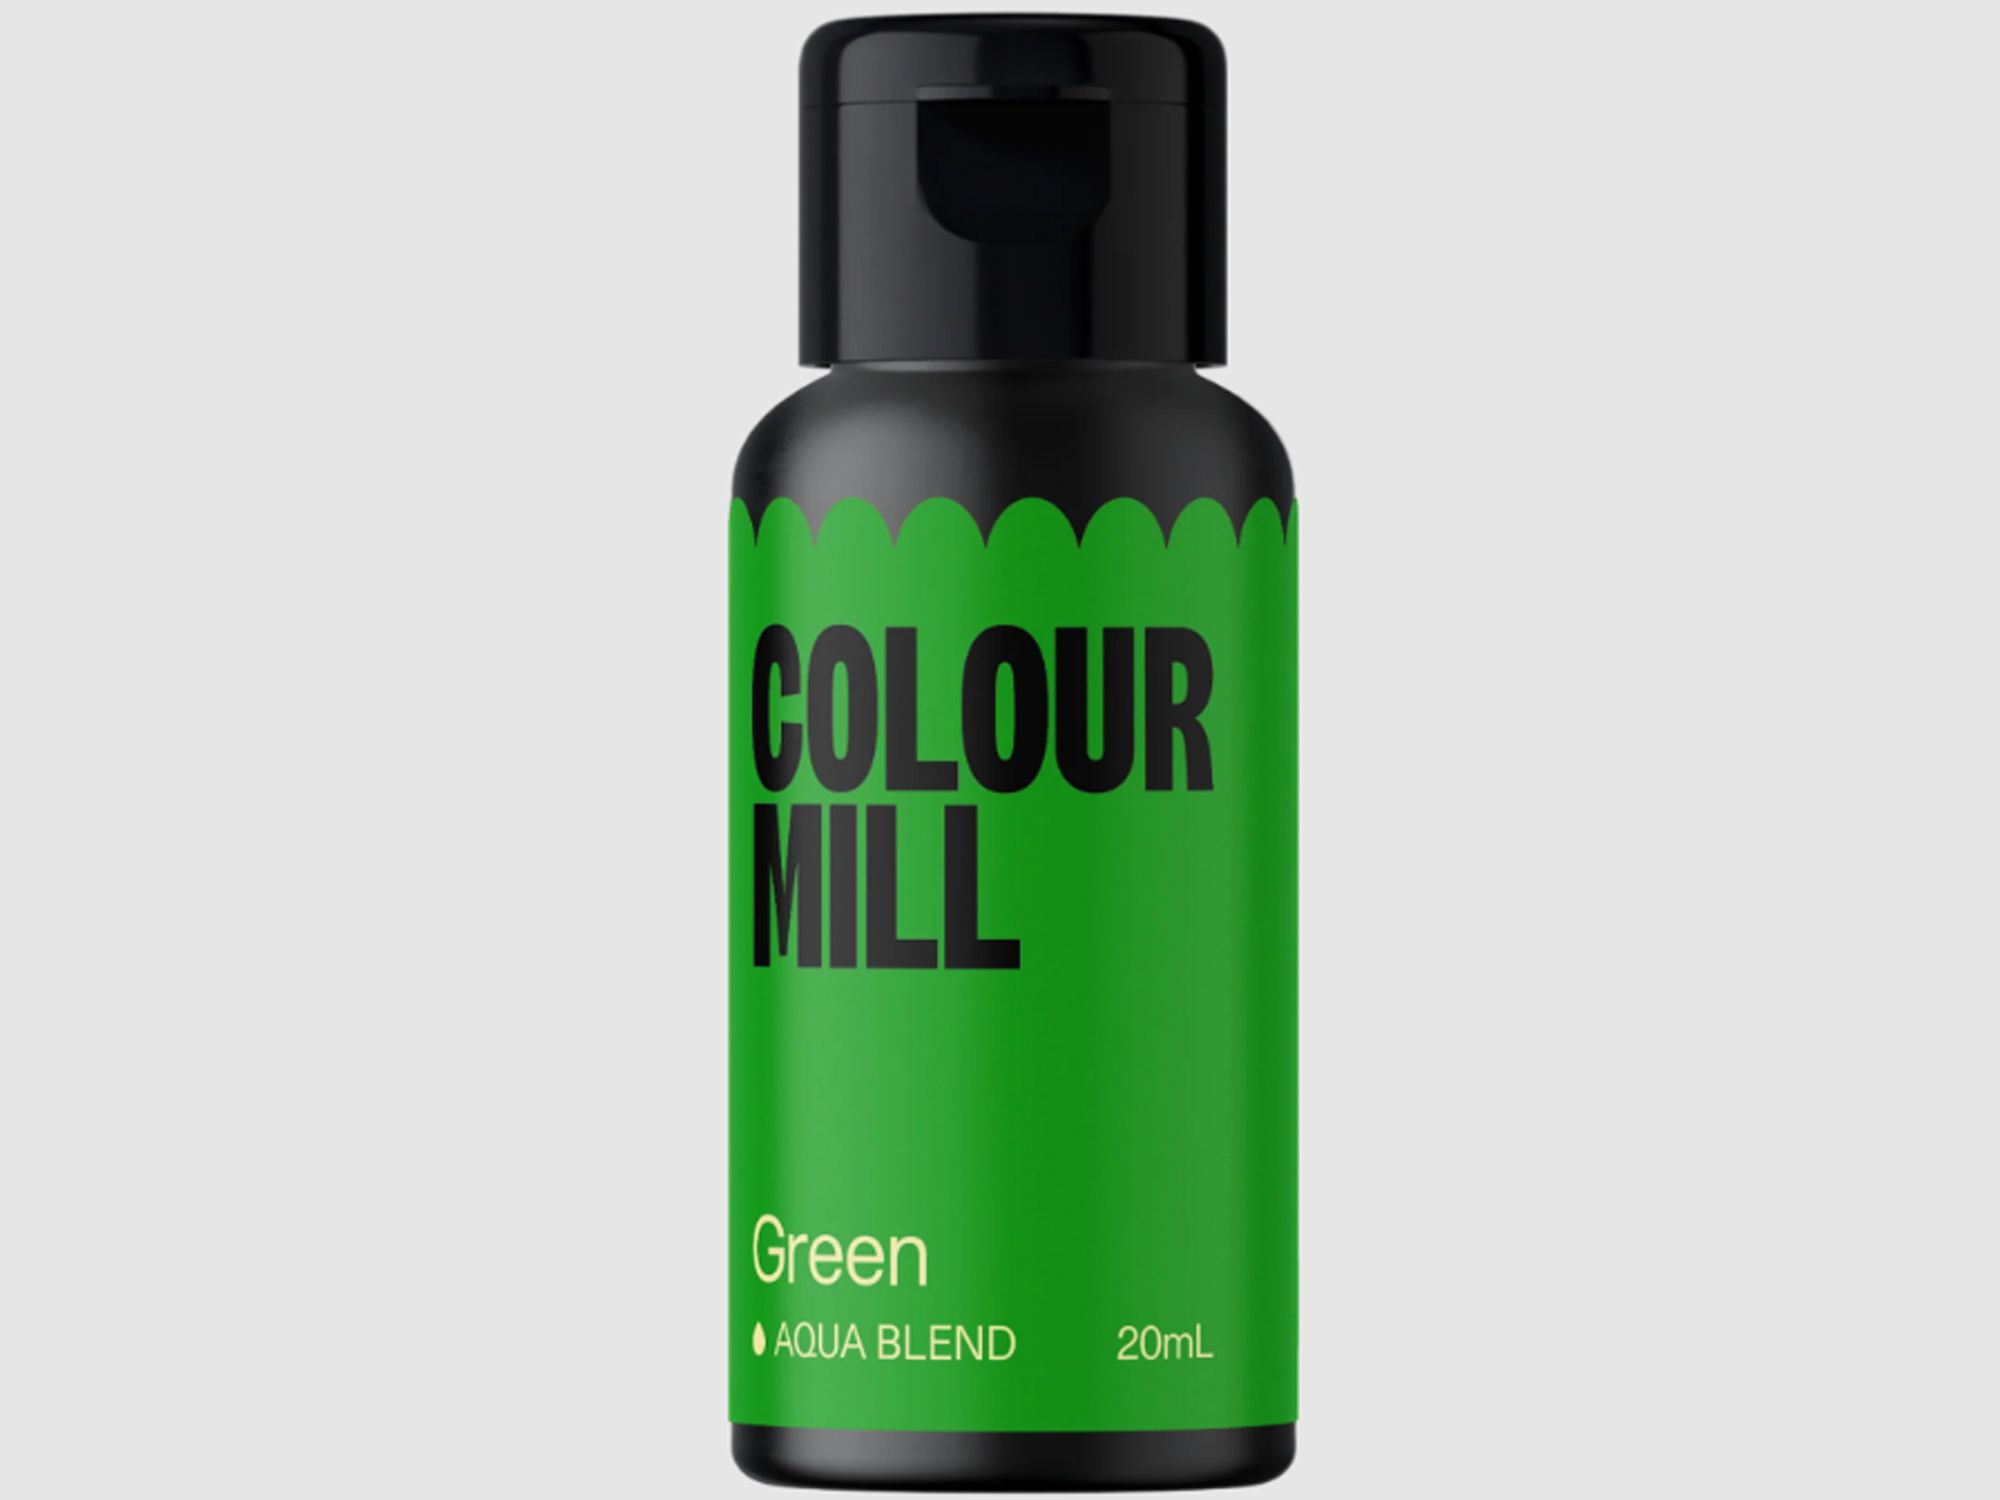 Colour Mill Green (Aqua Blend) 20ml